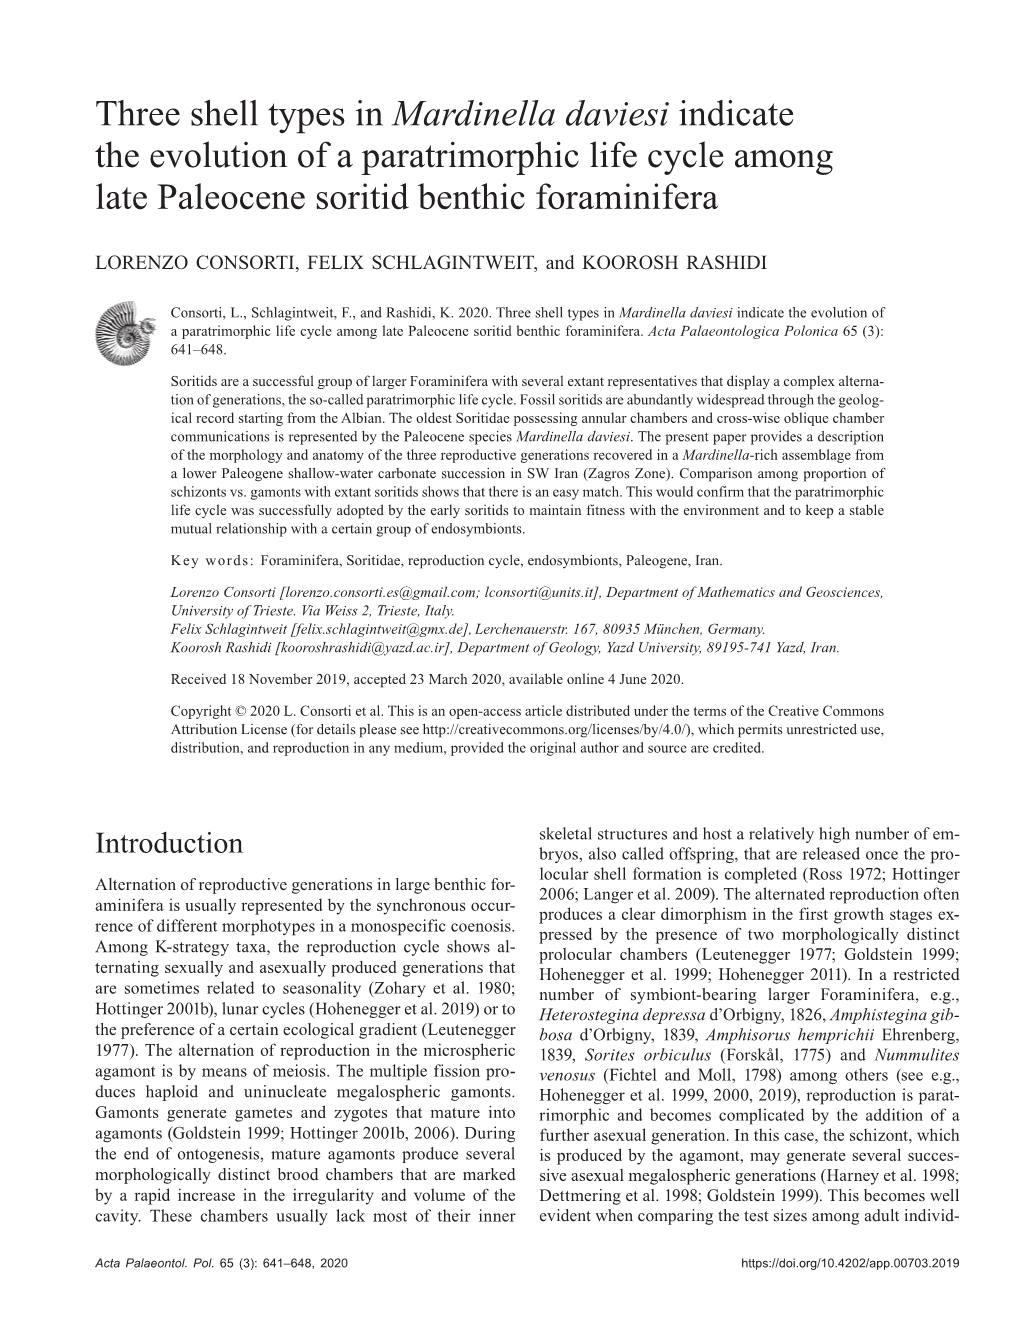 Three Shell Types in Mardinella Daviesi Indicate the Evolution of a Paratrimorphic Life Cycle Among Late Paleocene Soritid Benthic Foraminifera